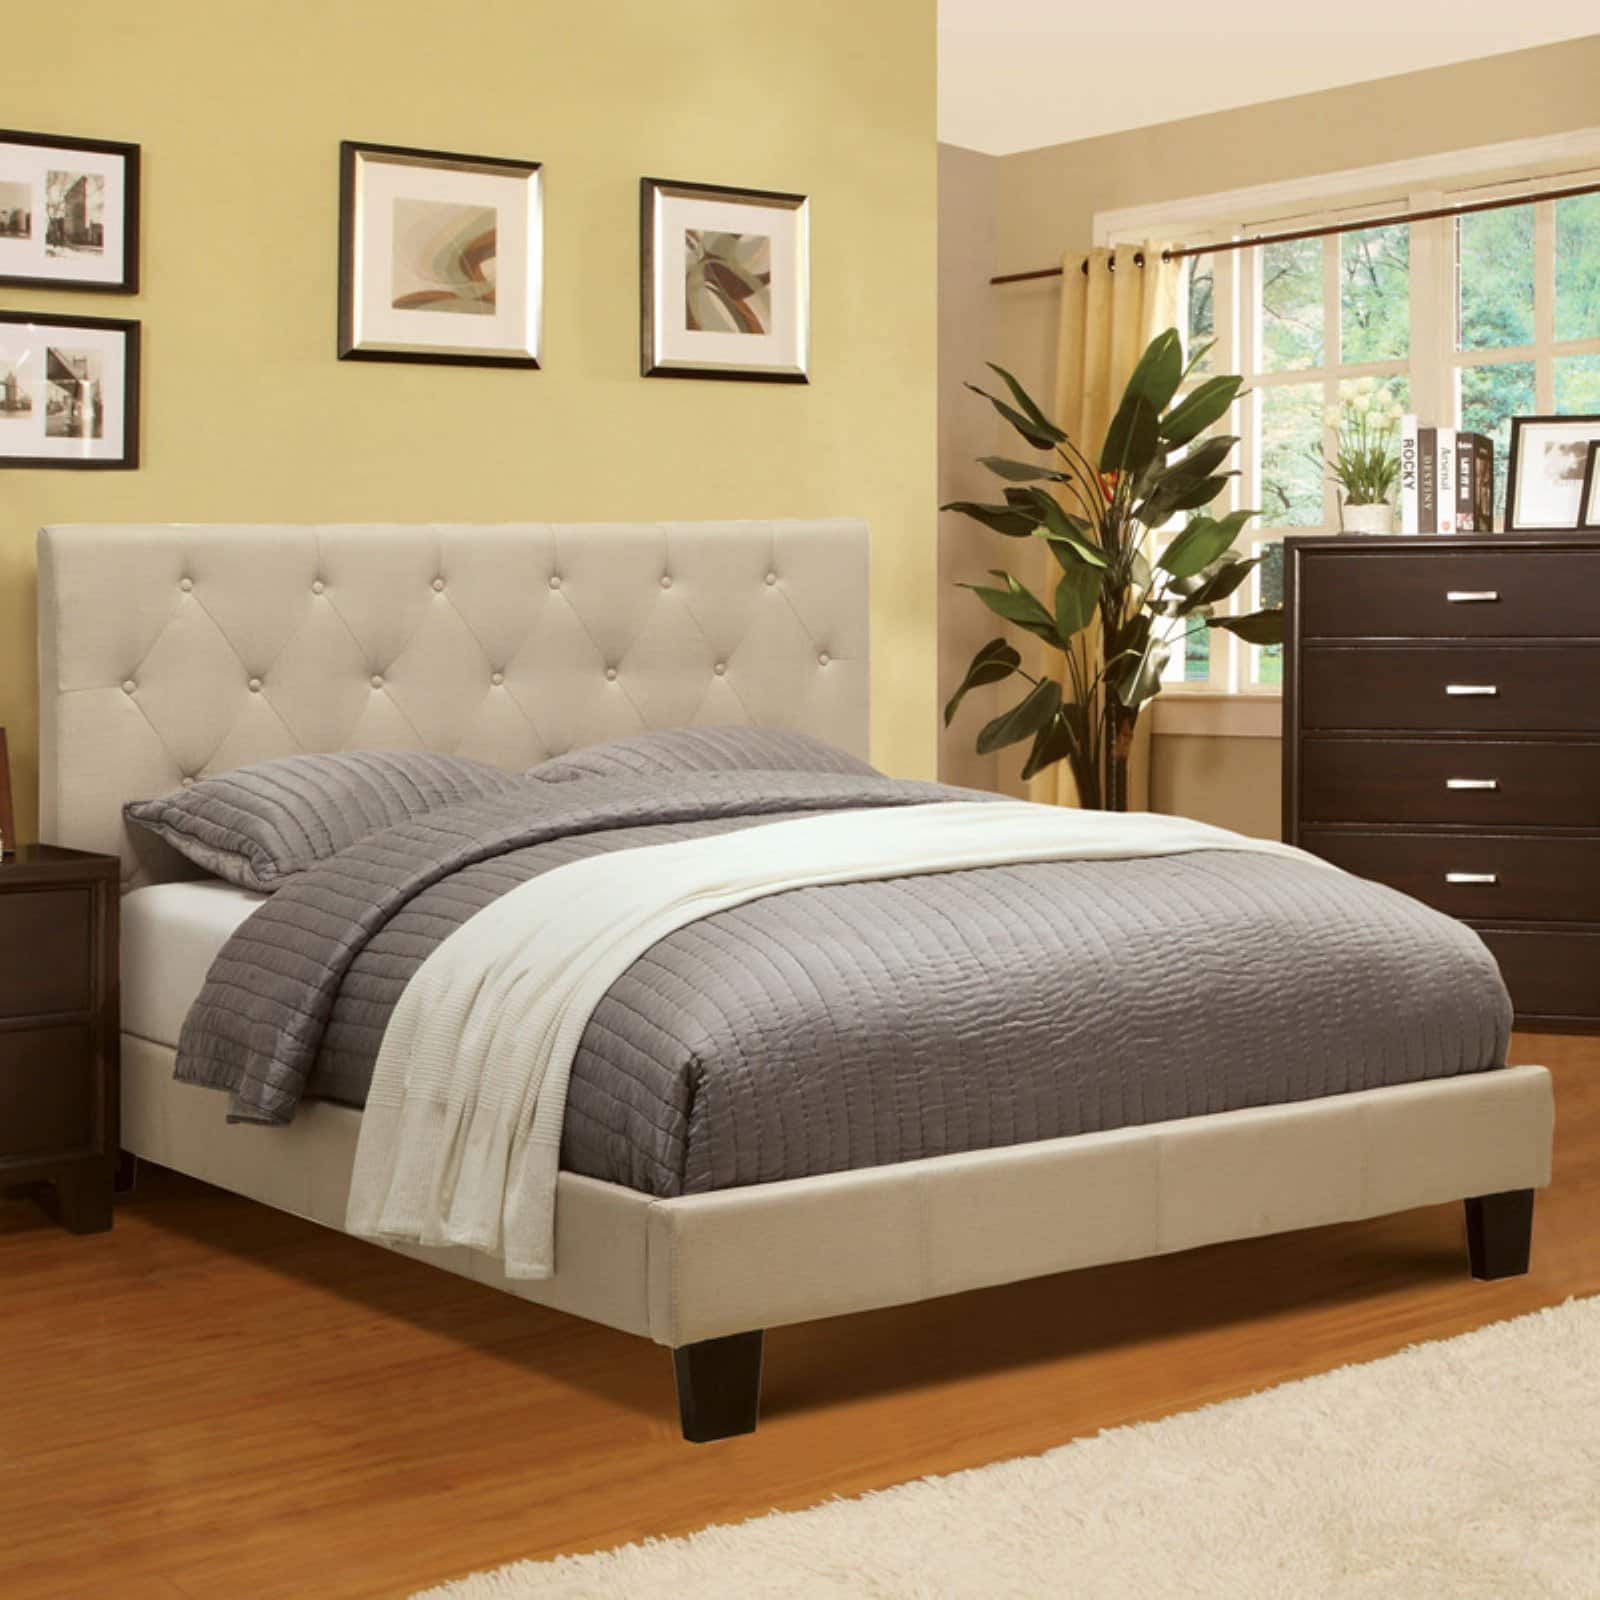 Furniture of America Wendy Tufted Platform Bed - Ivory - image 1 of 2